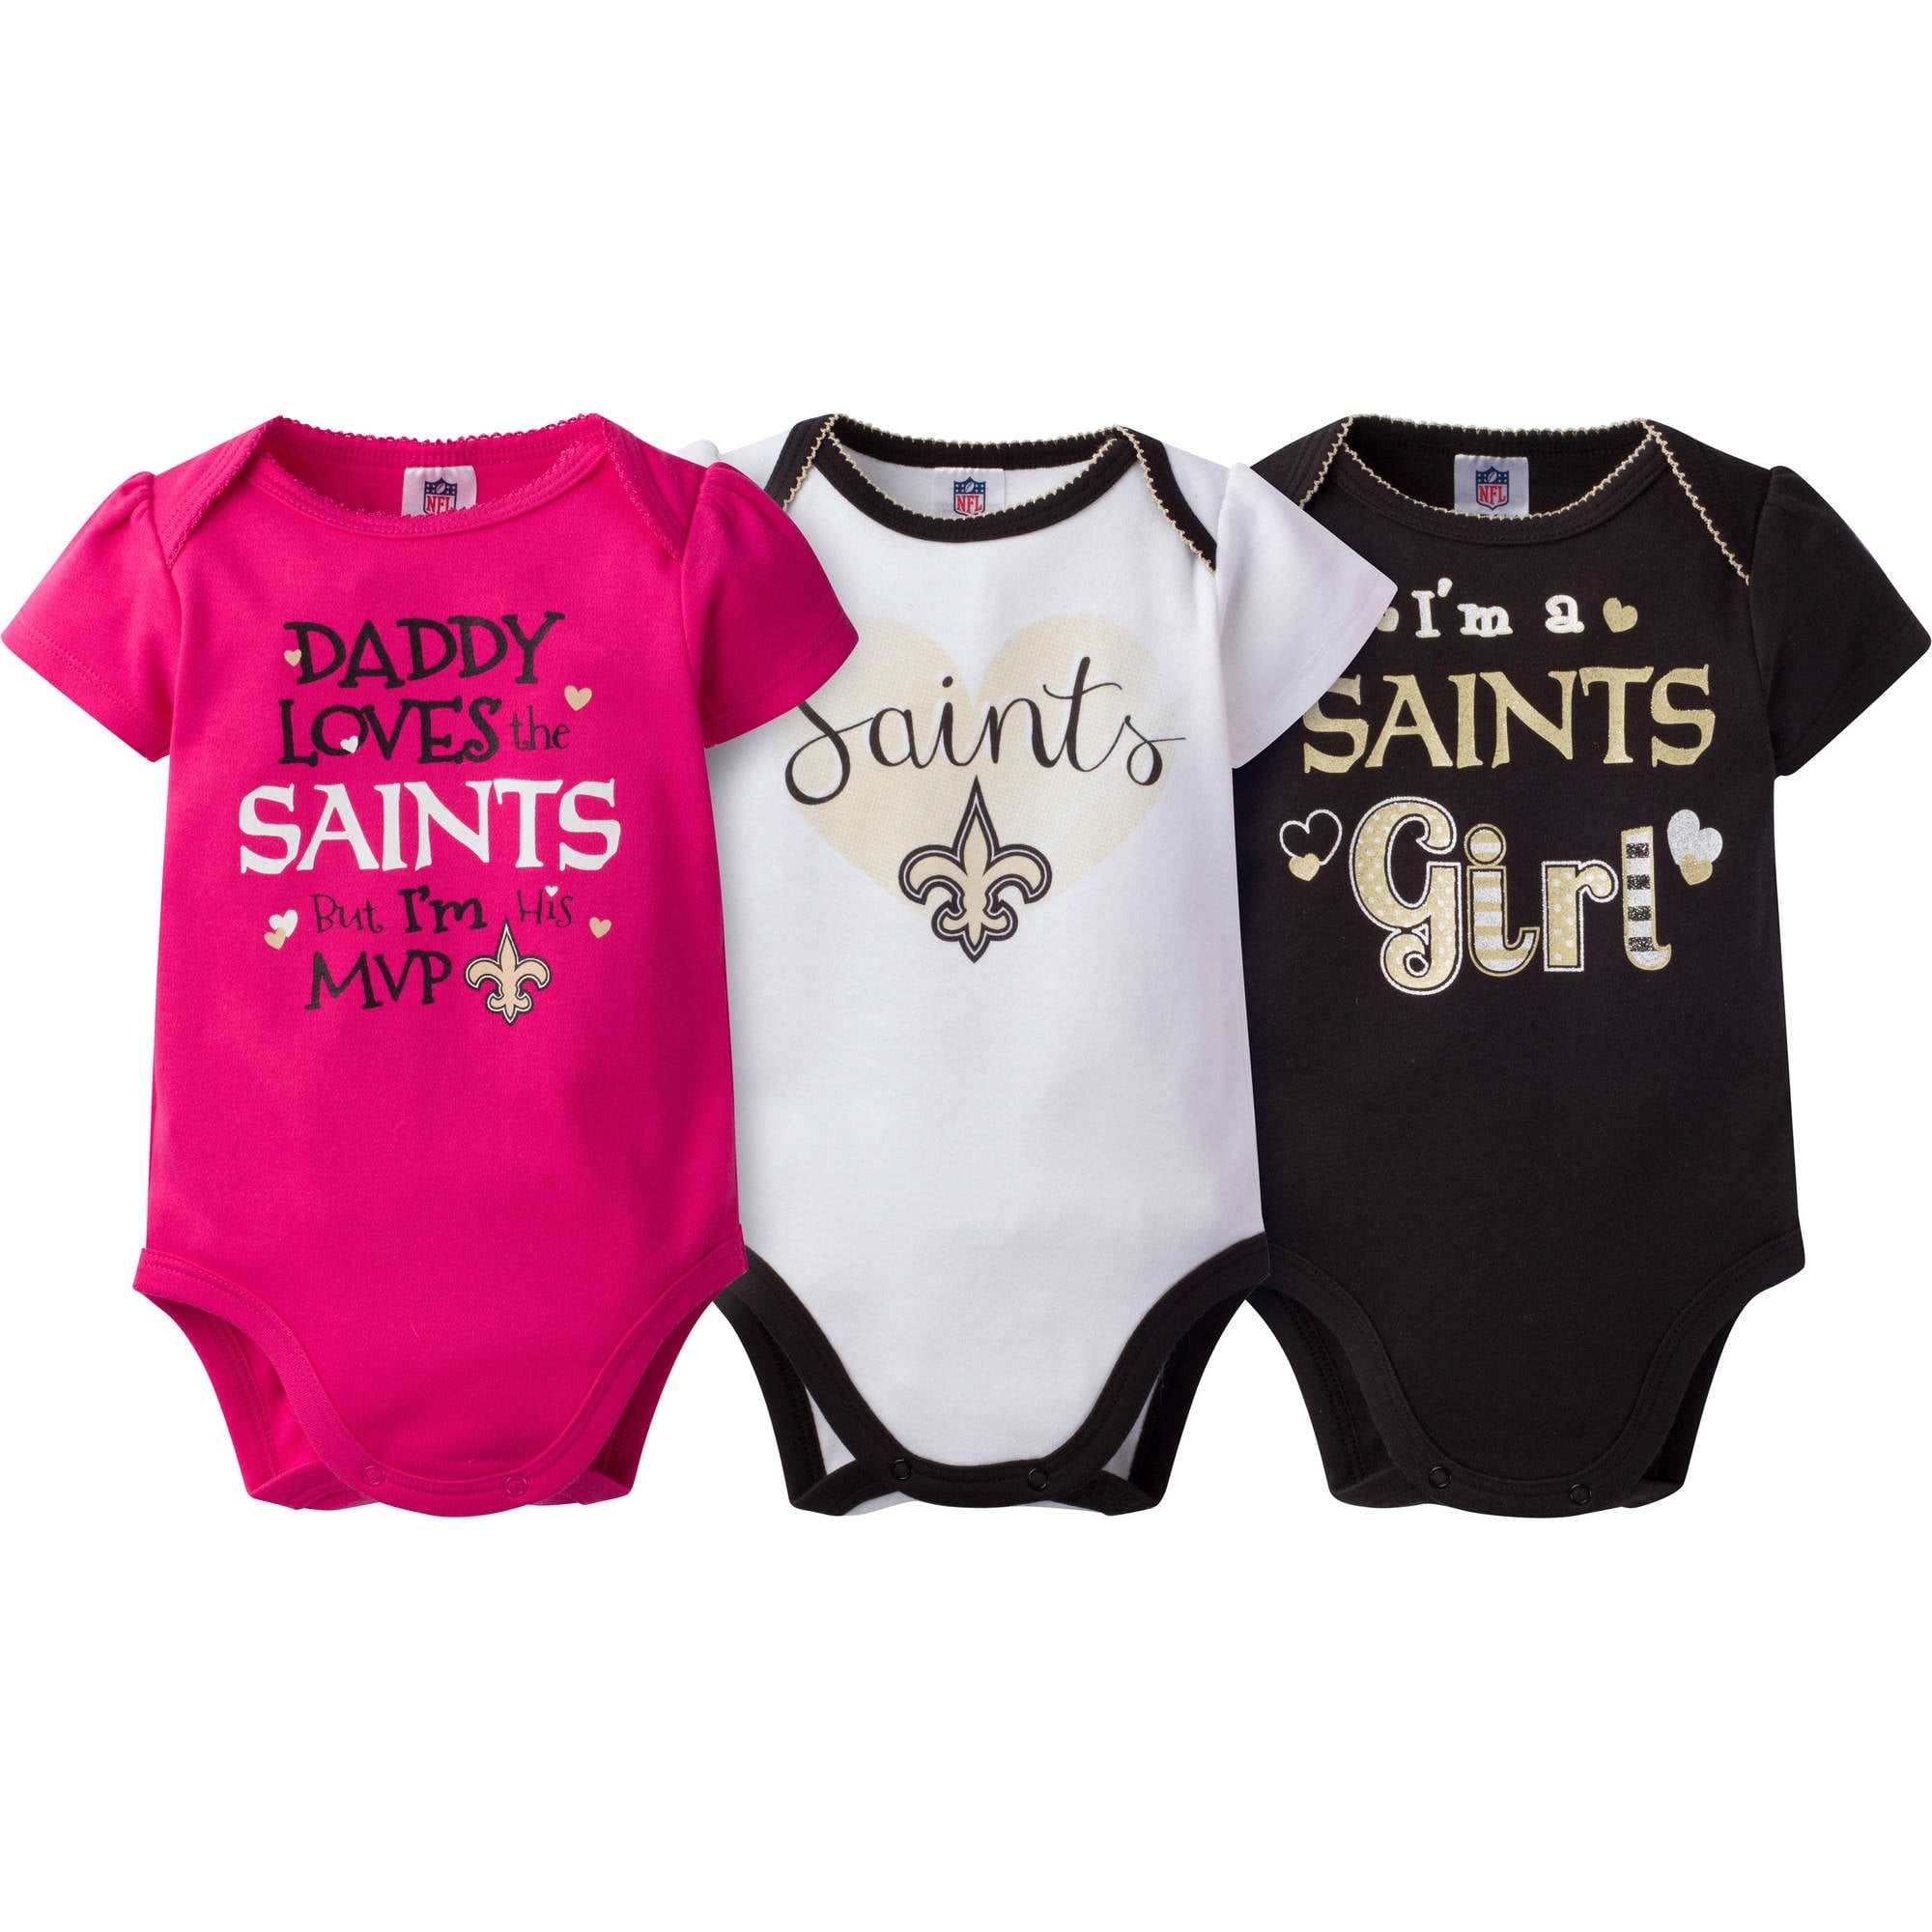 new orleans saints infant clothing